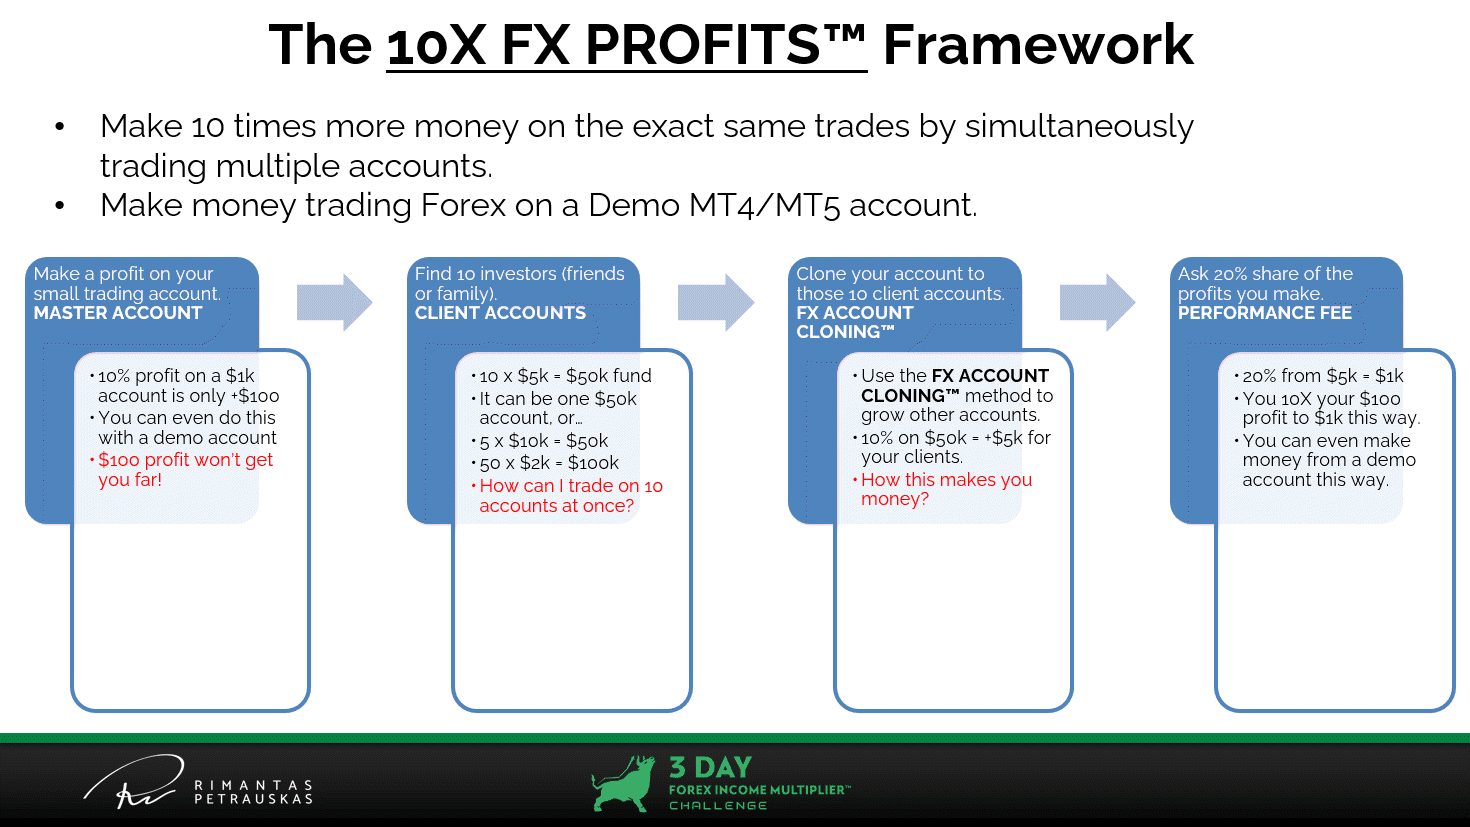 The 10X FX Profits™ framework